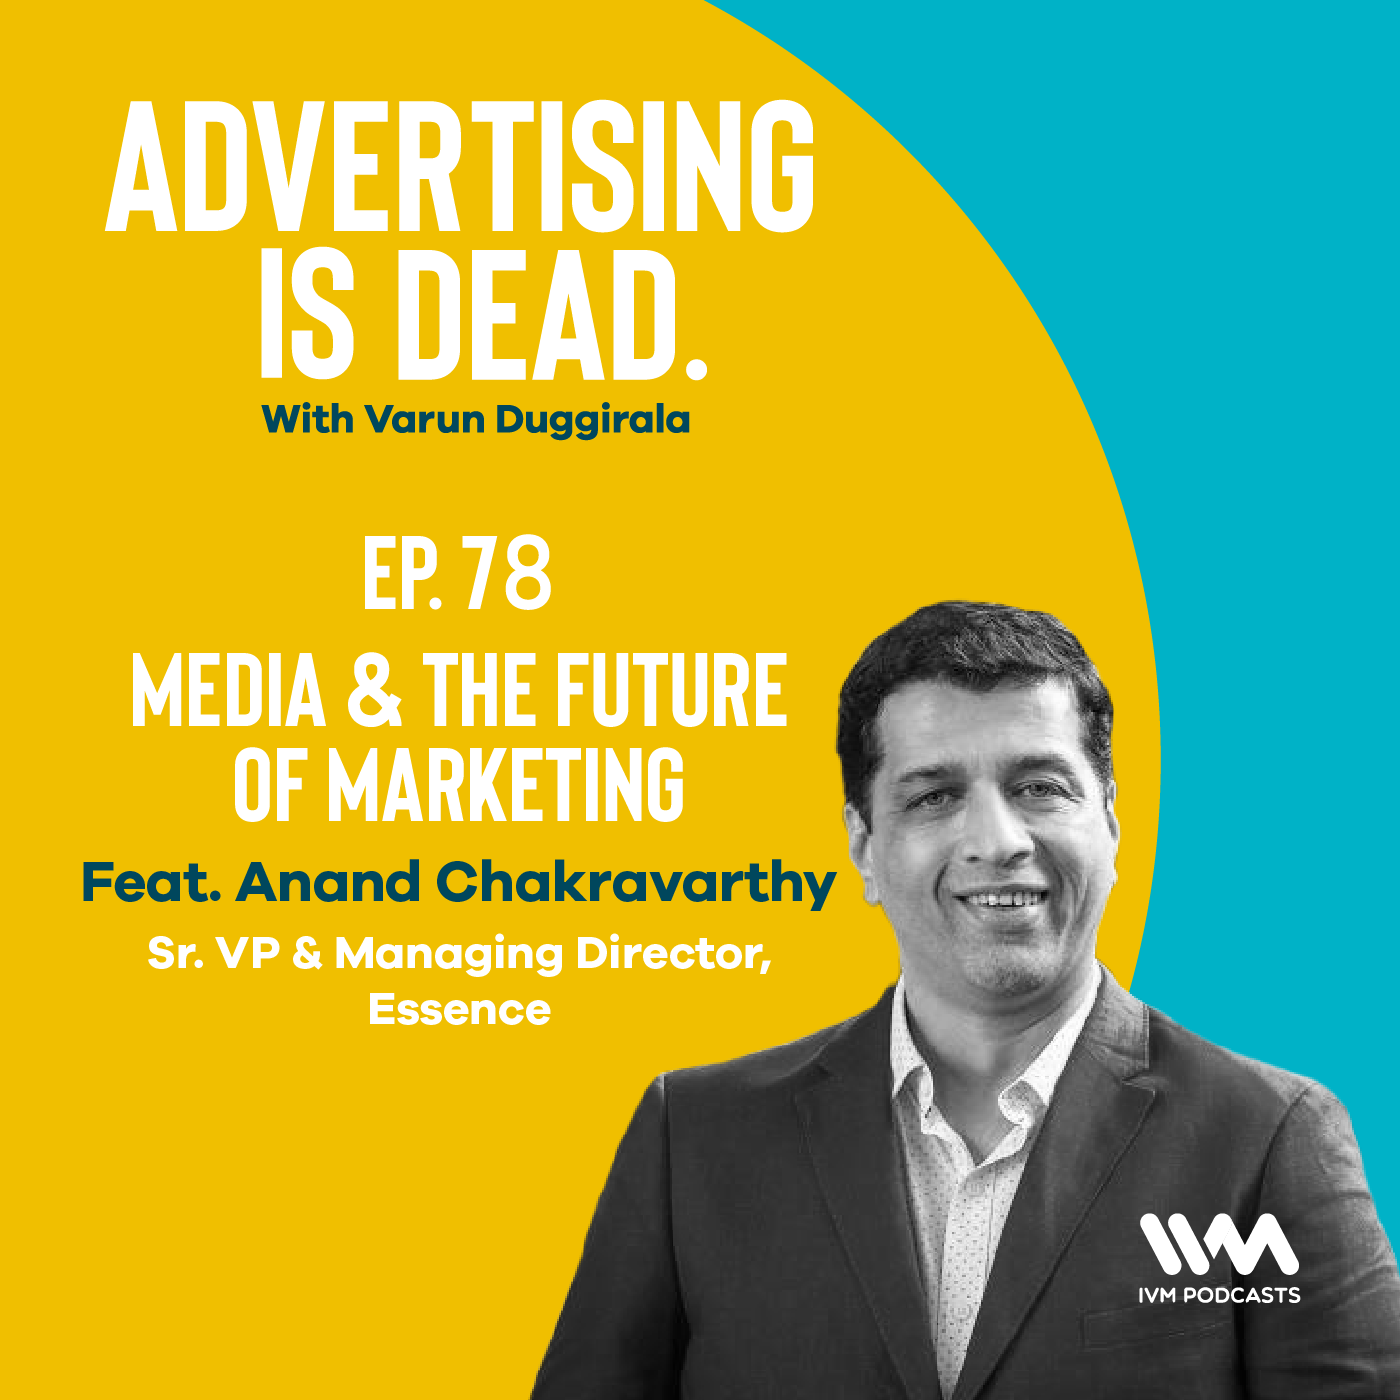 Anand Chakravarthy on Media & the Future of Marketing